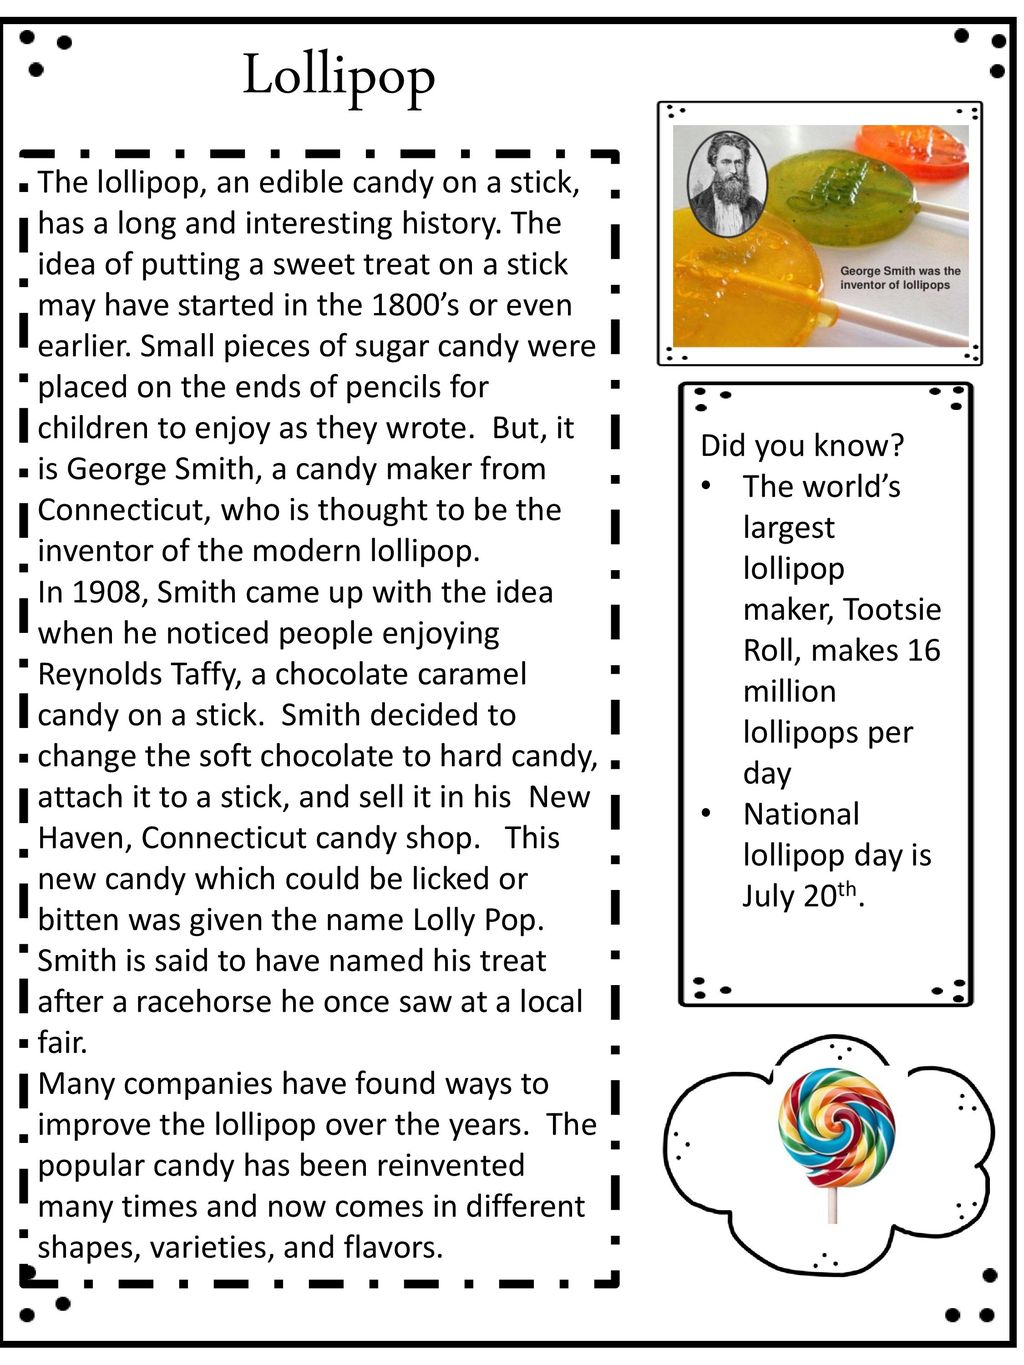 History of Lollipops